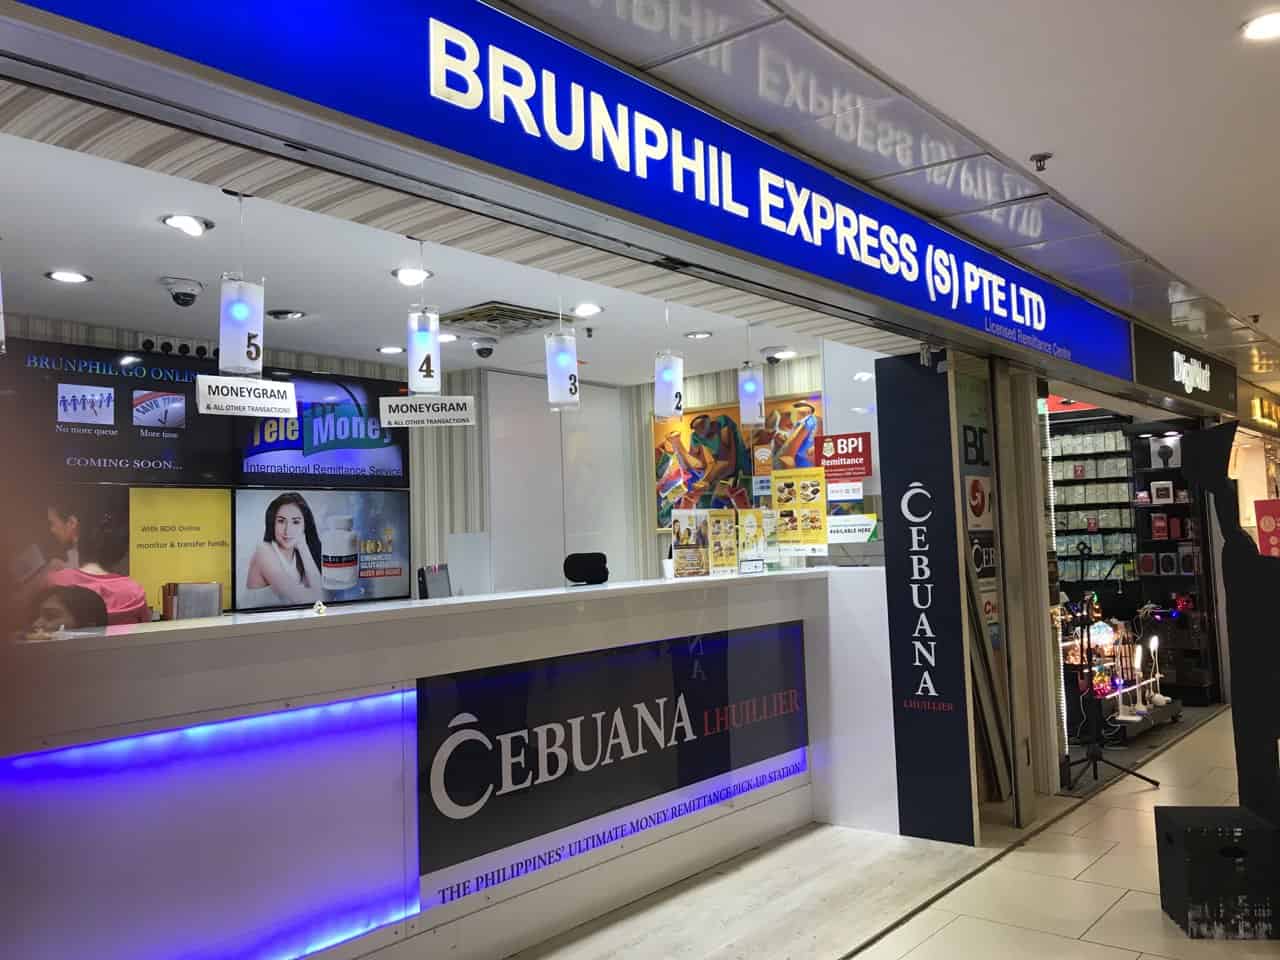 Brunphil Express, Lucky Plaza, Singapore